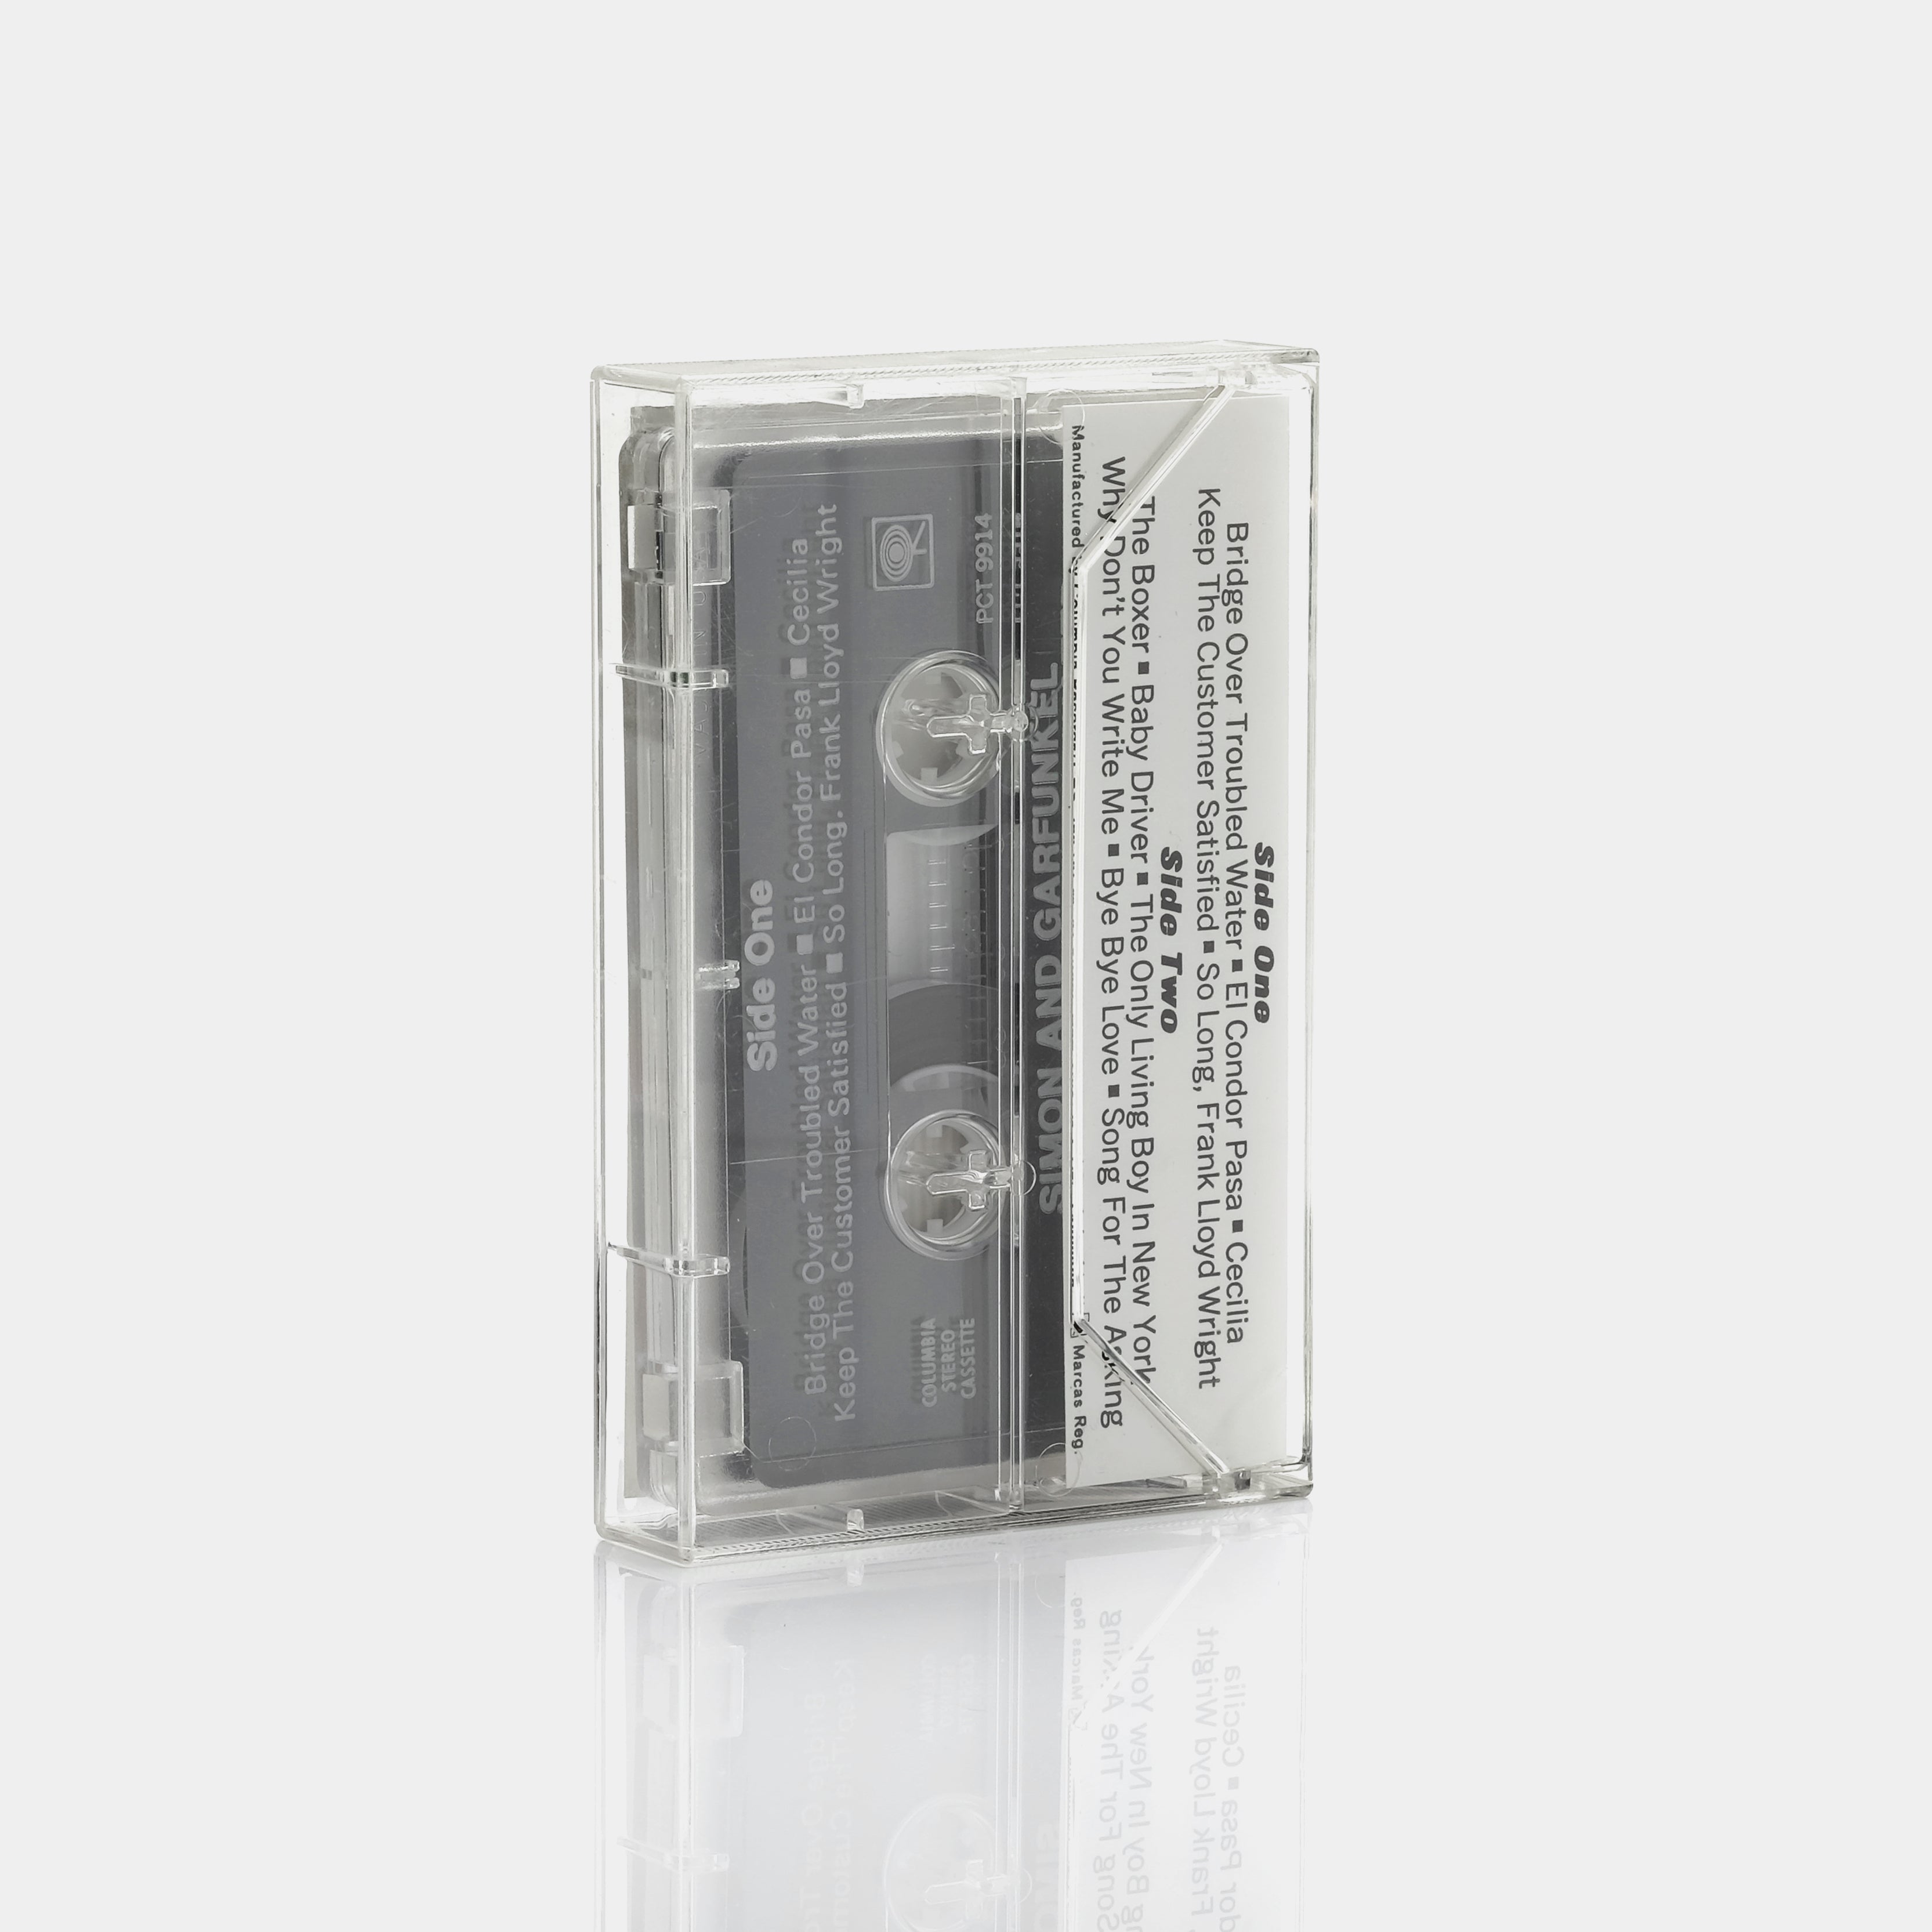 Simon & Garfunkel - Bridge Over Troubled Water Cassette Tape